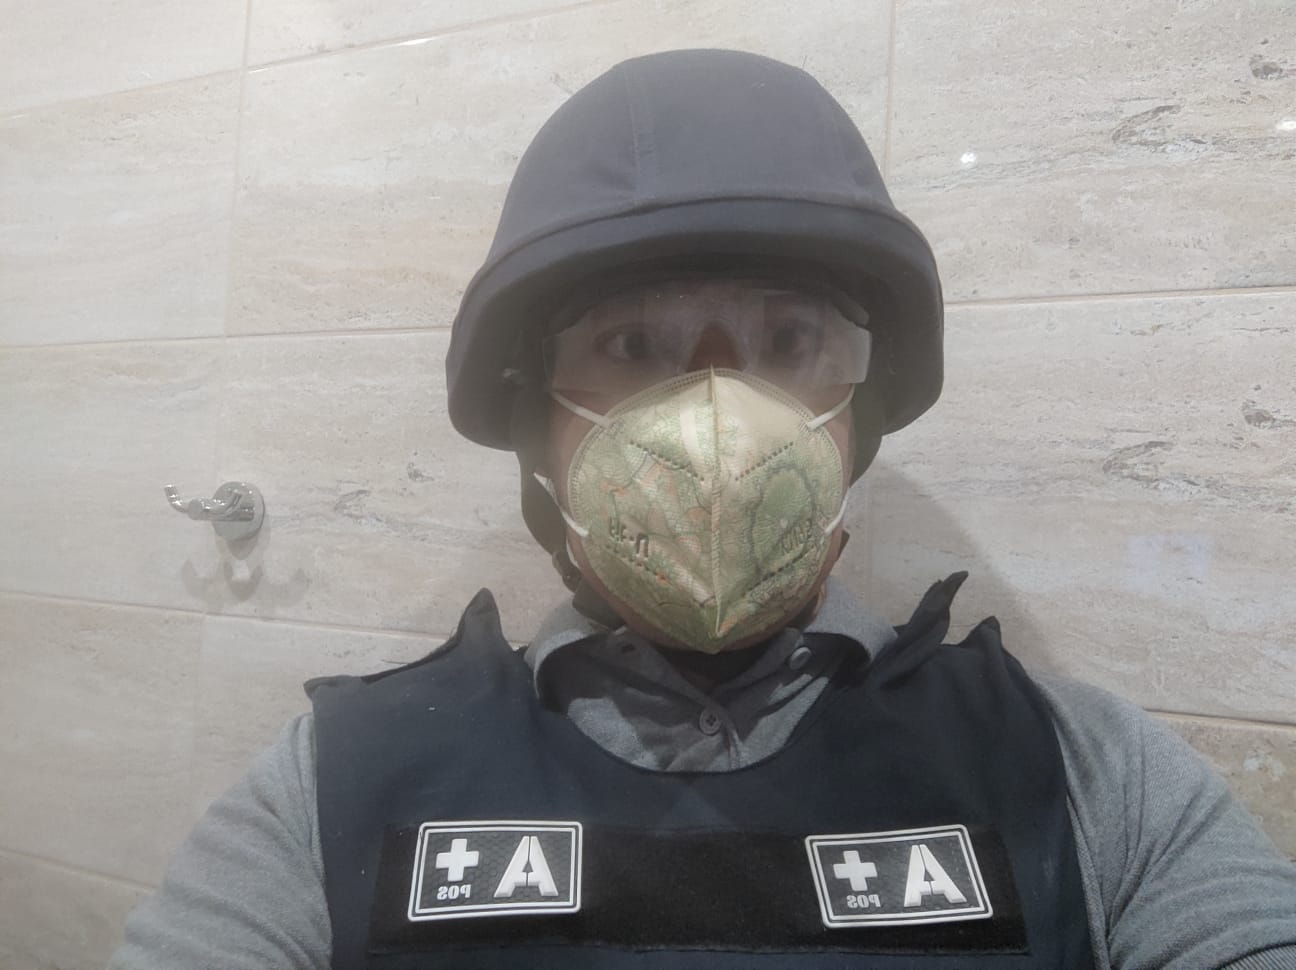  Odessa Under Attack! Tidur Pun Pakai Helm dan Rompi Anti Peluru 